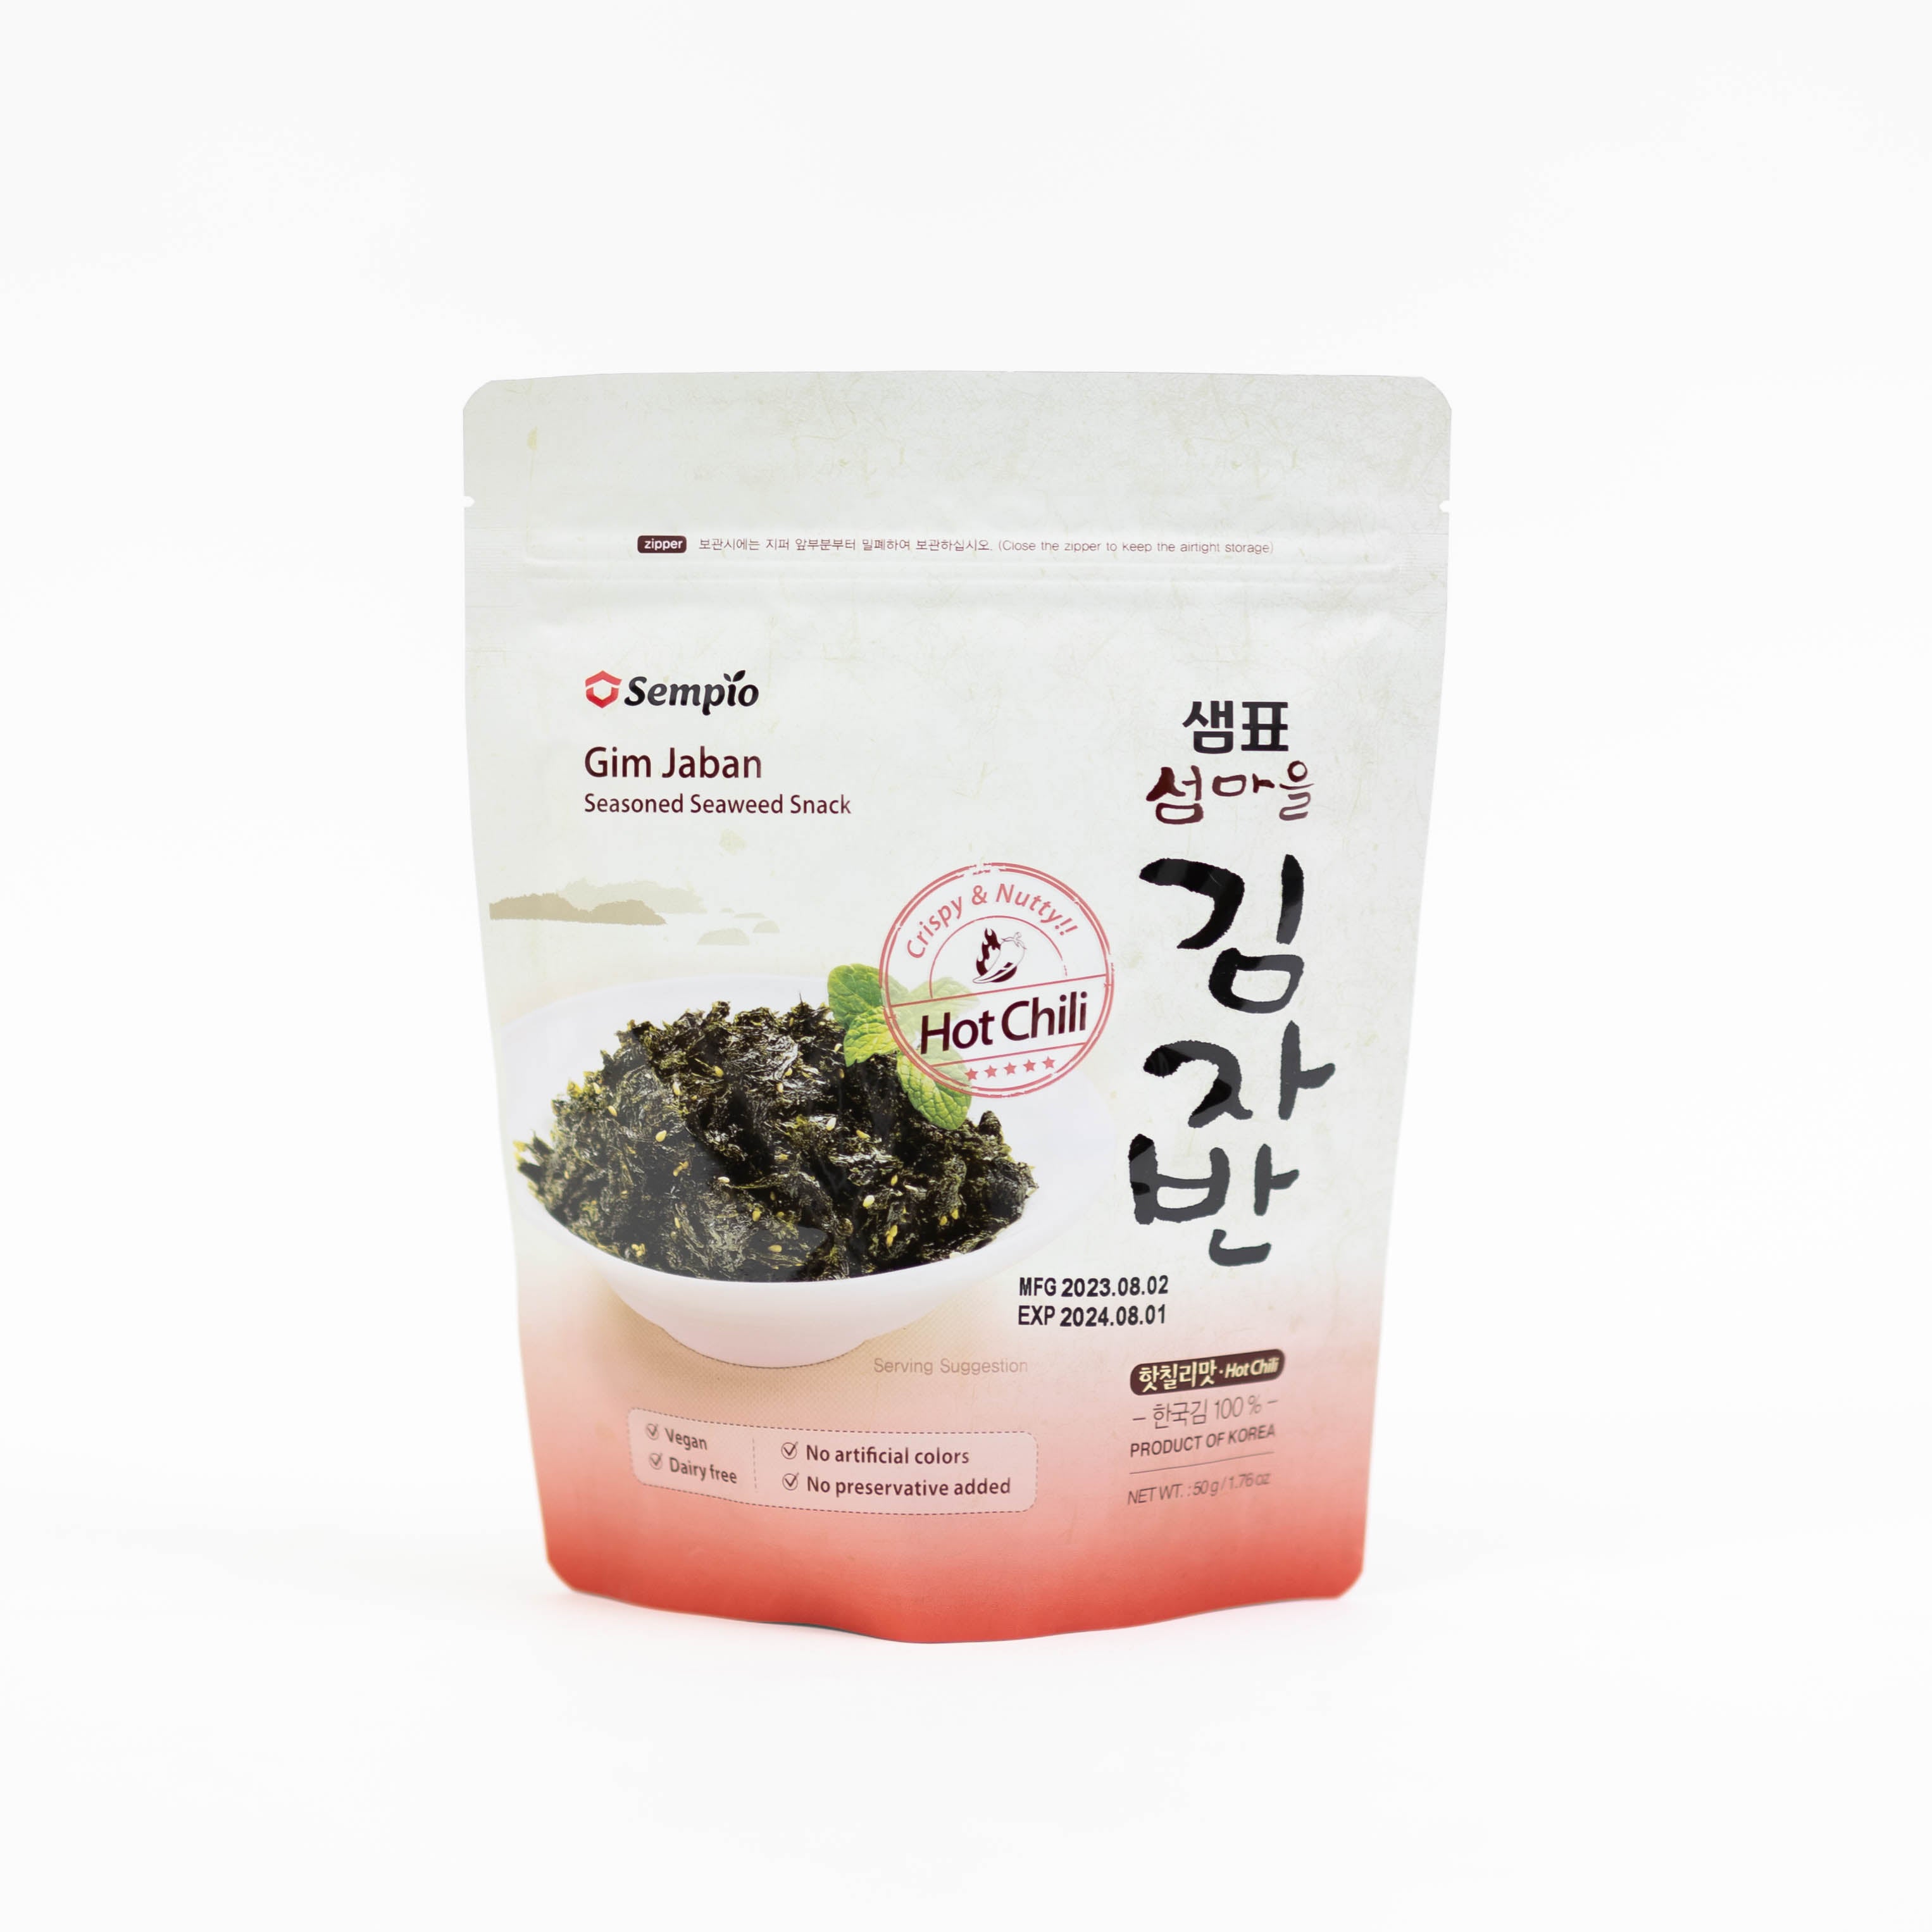 dinese.de asiashop onlineshop asiashop sempio gim jaban seaweed seetang snack hot chili asiatische snacks lebensmittel